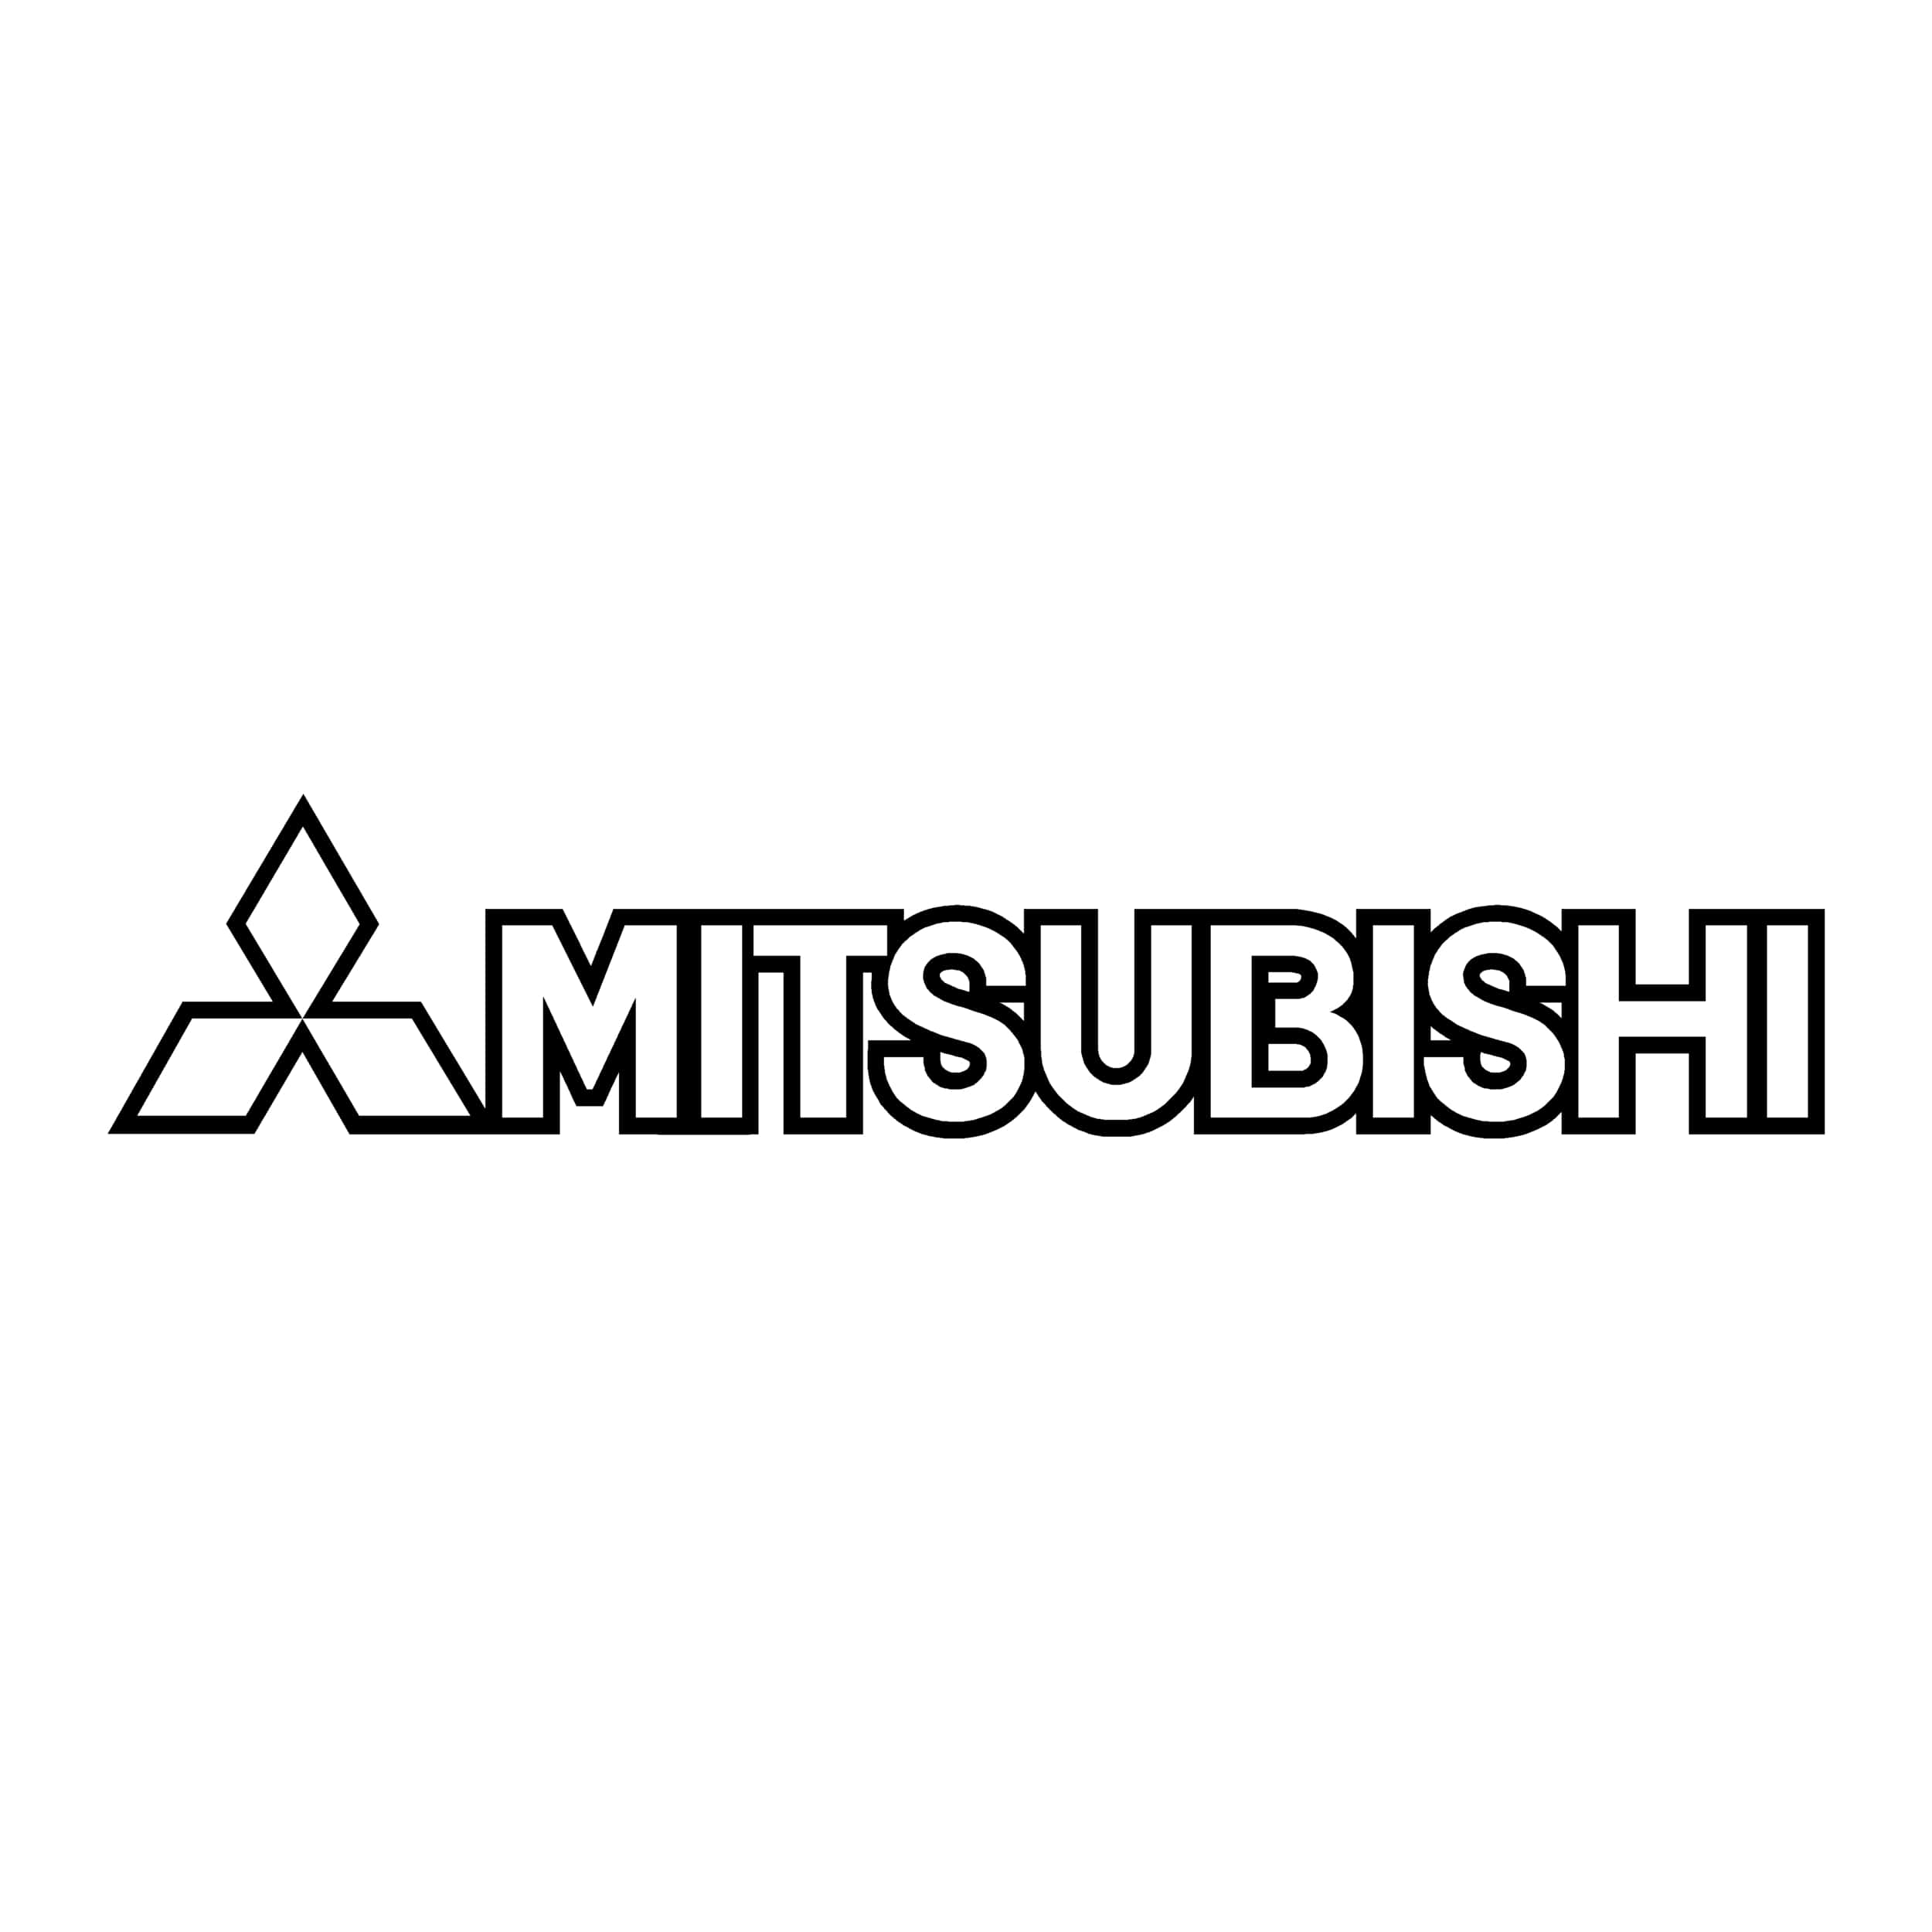 sticker-mitsubishi-ref-14-logo-l200-pajero-sport-4x4-land-tout-terrain-competition-rallye-autocollant-stickers-min